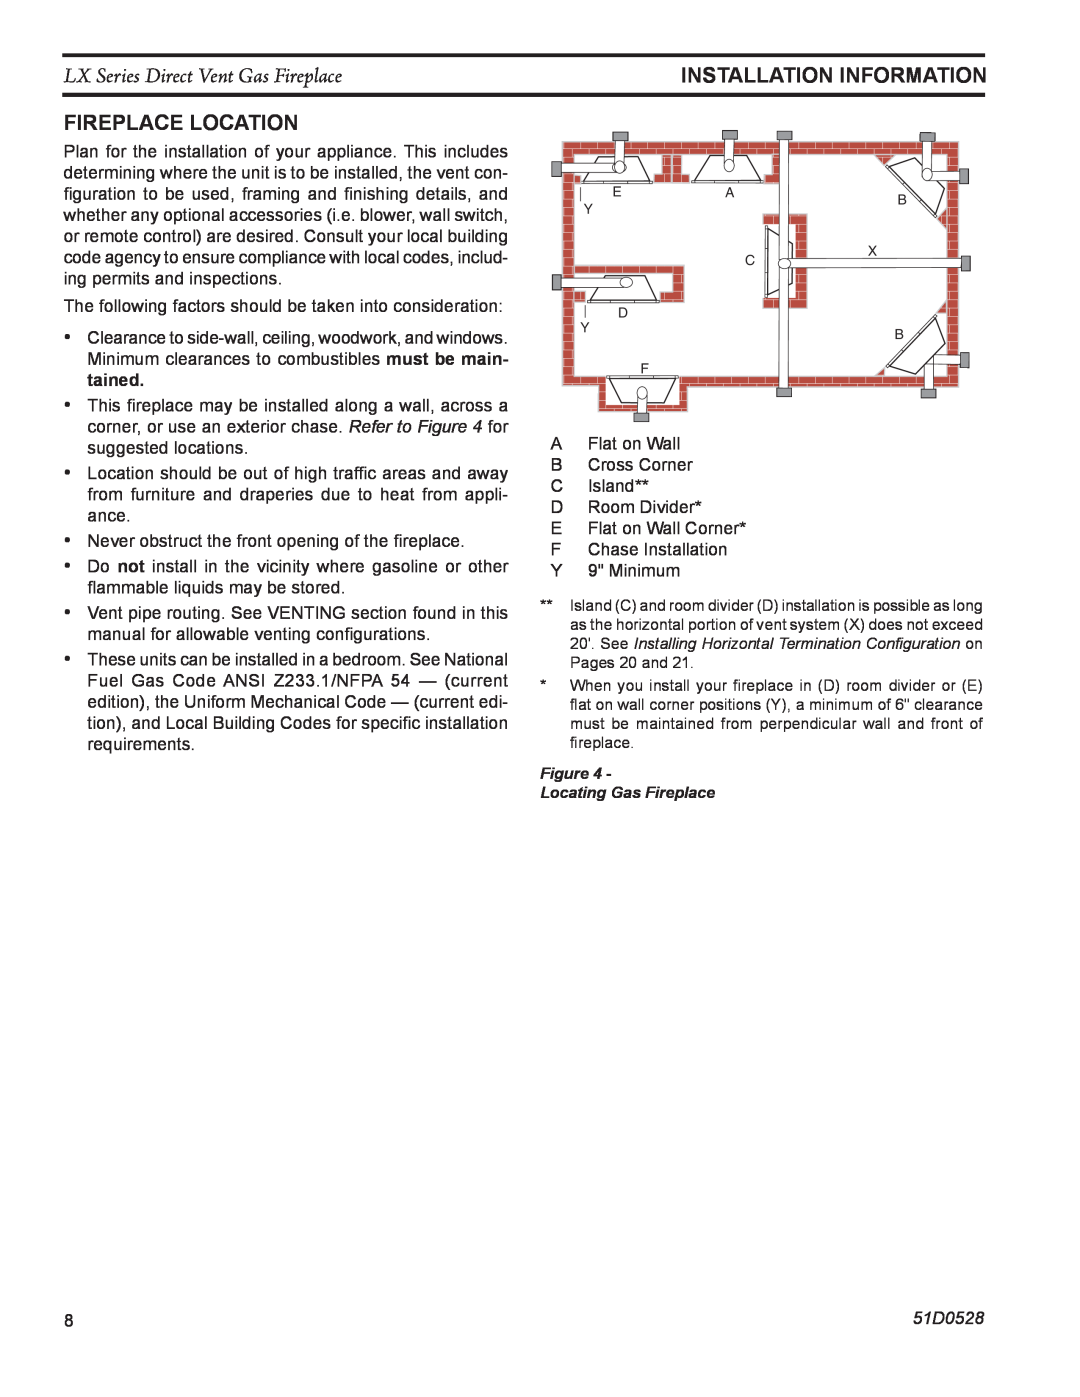 Monessen Hearth LX36DV, LX32DV Fireplace Location, LX Series Direct Vent Gas Fireplace, Installation Information, 51D0528 